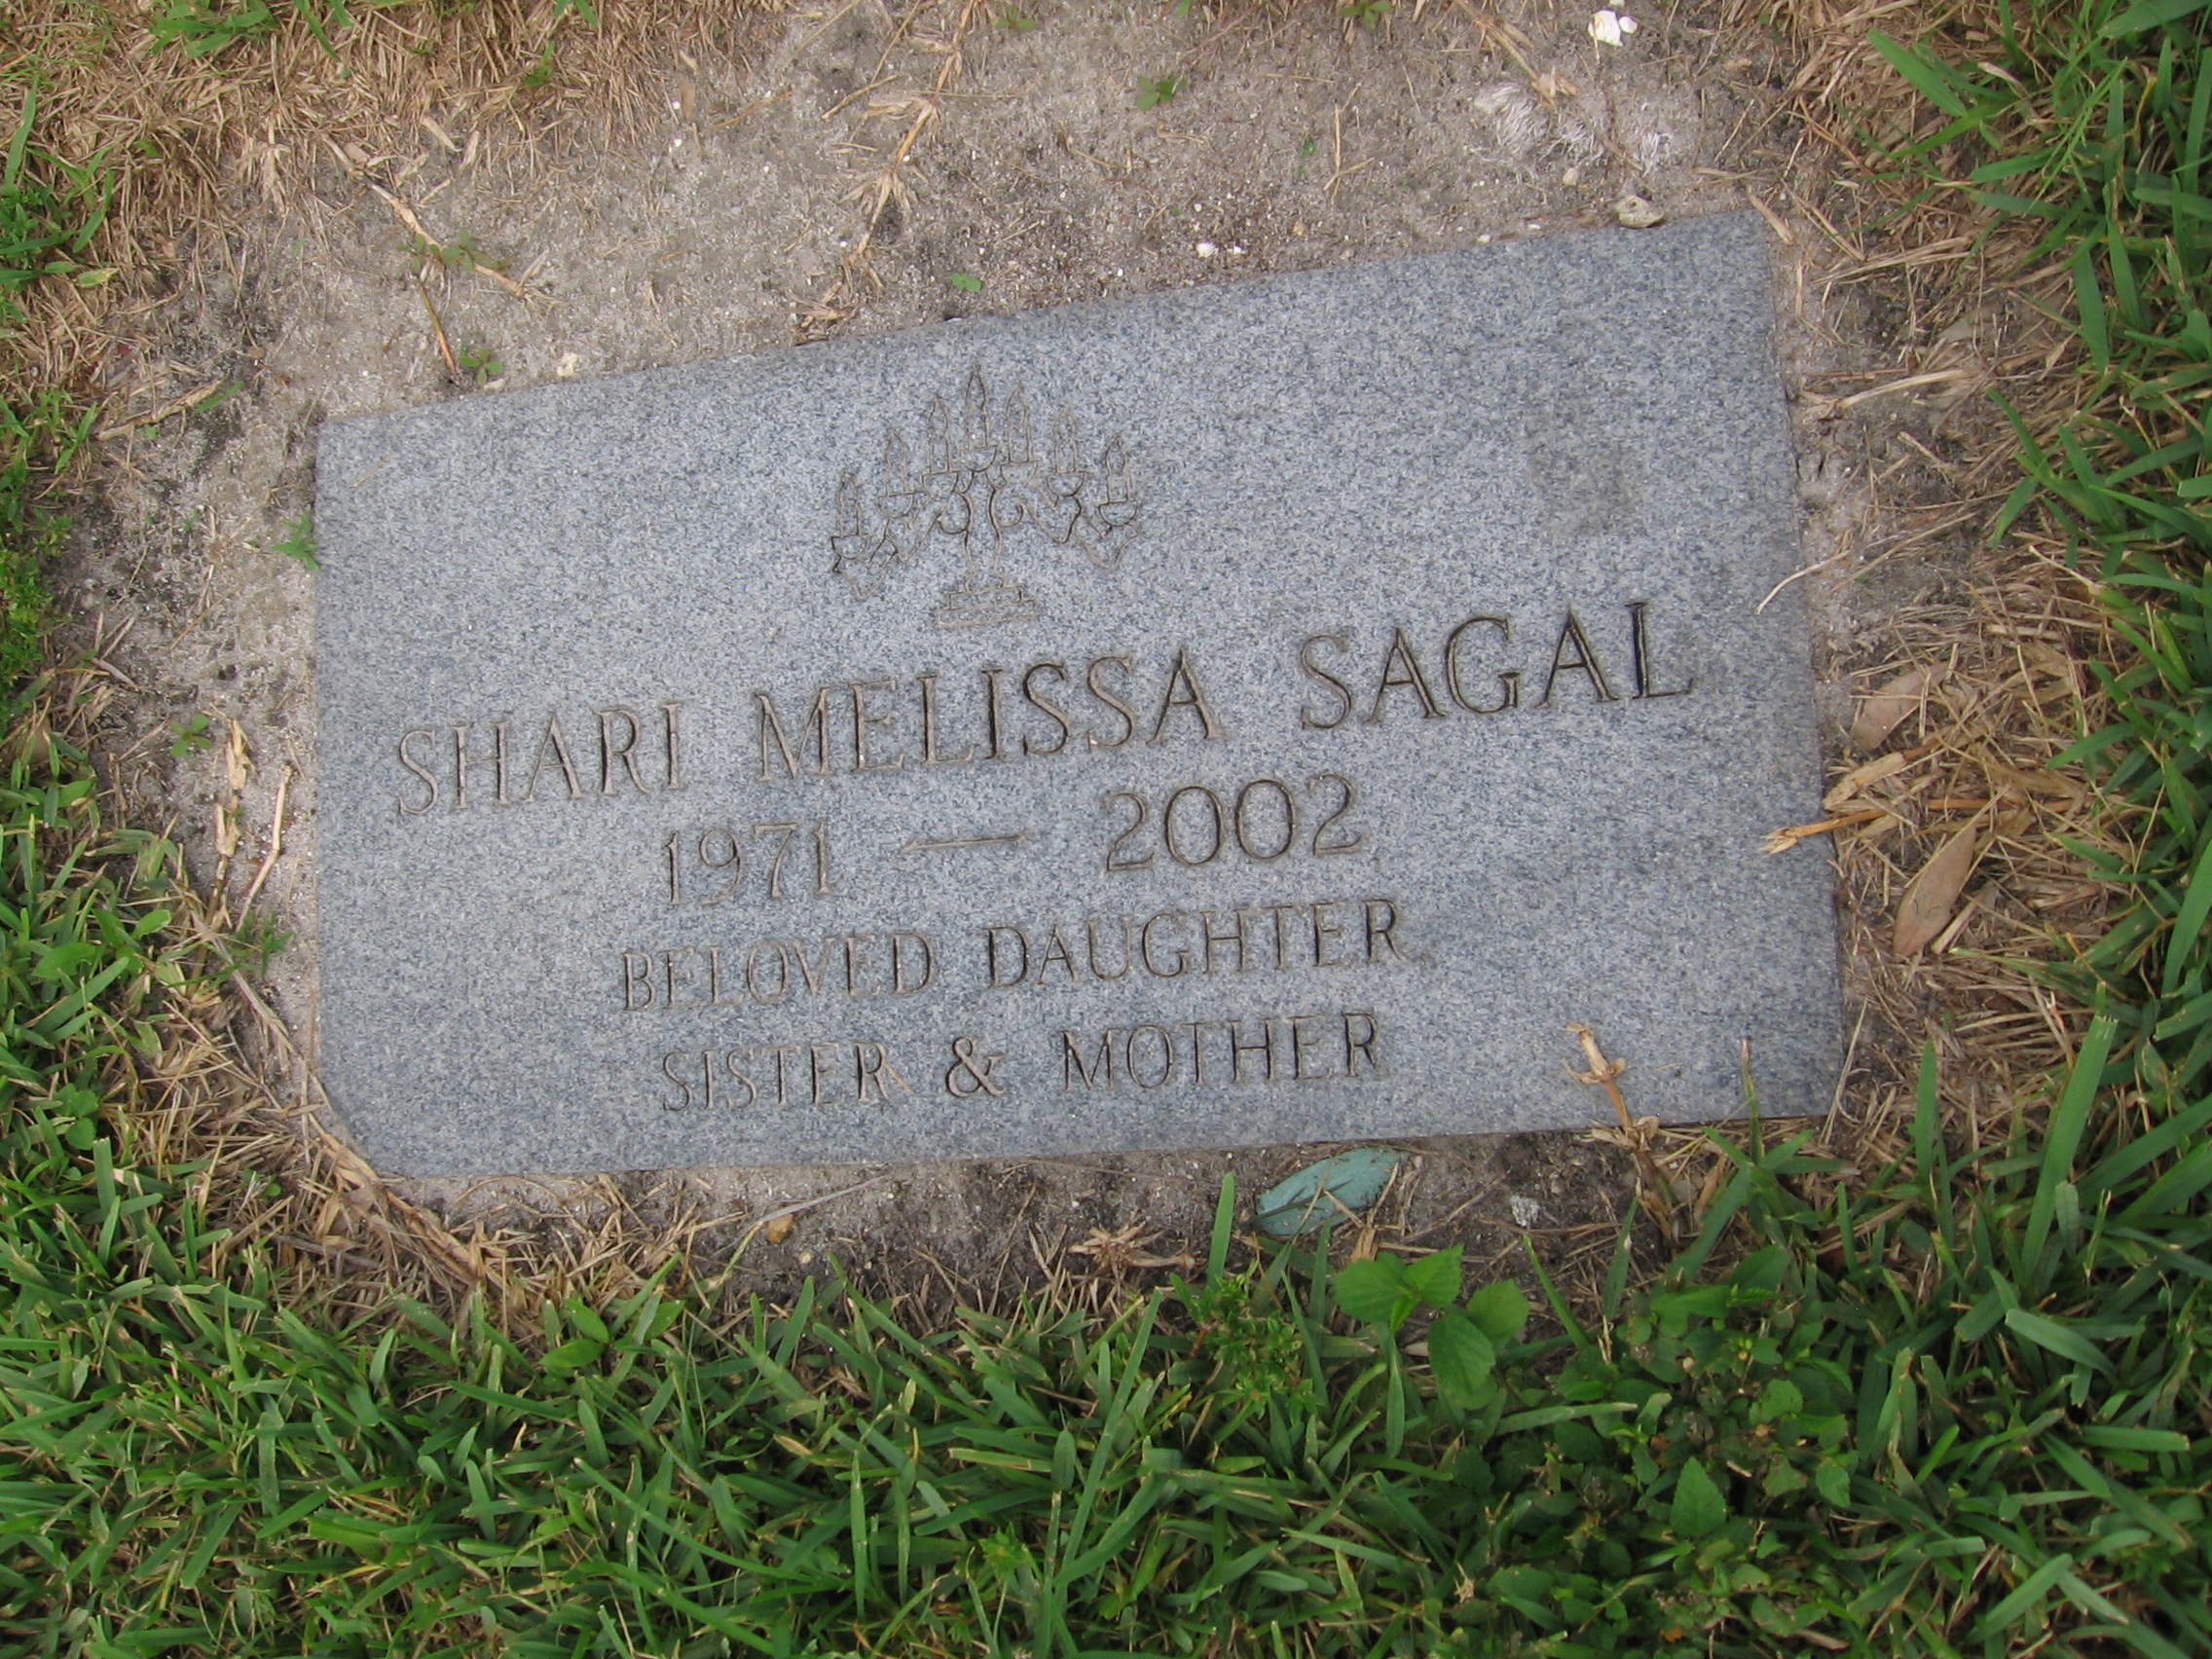 Shari Mellissa Sagal